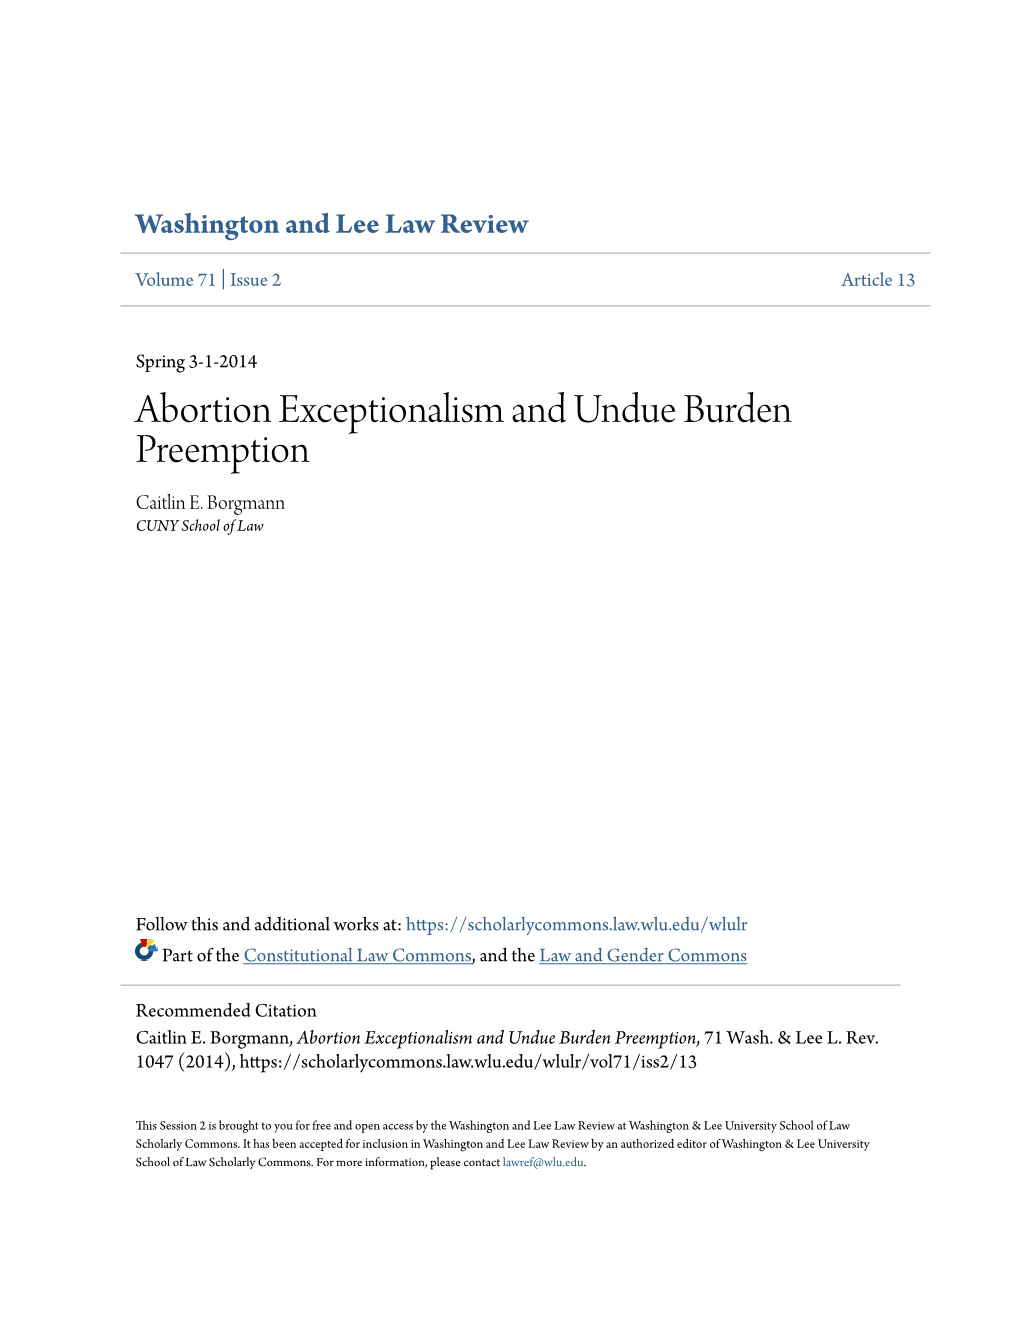 Abortion Exceptionalism and Undue Burden Preemption Caitlin E